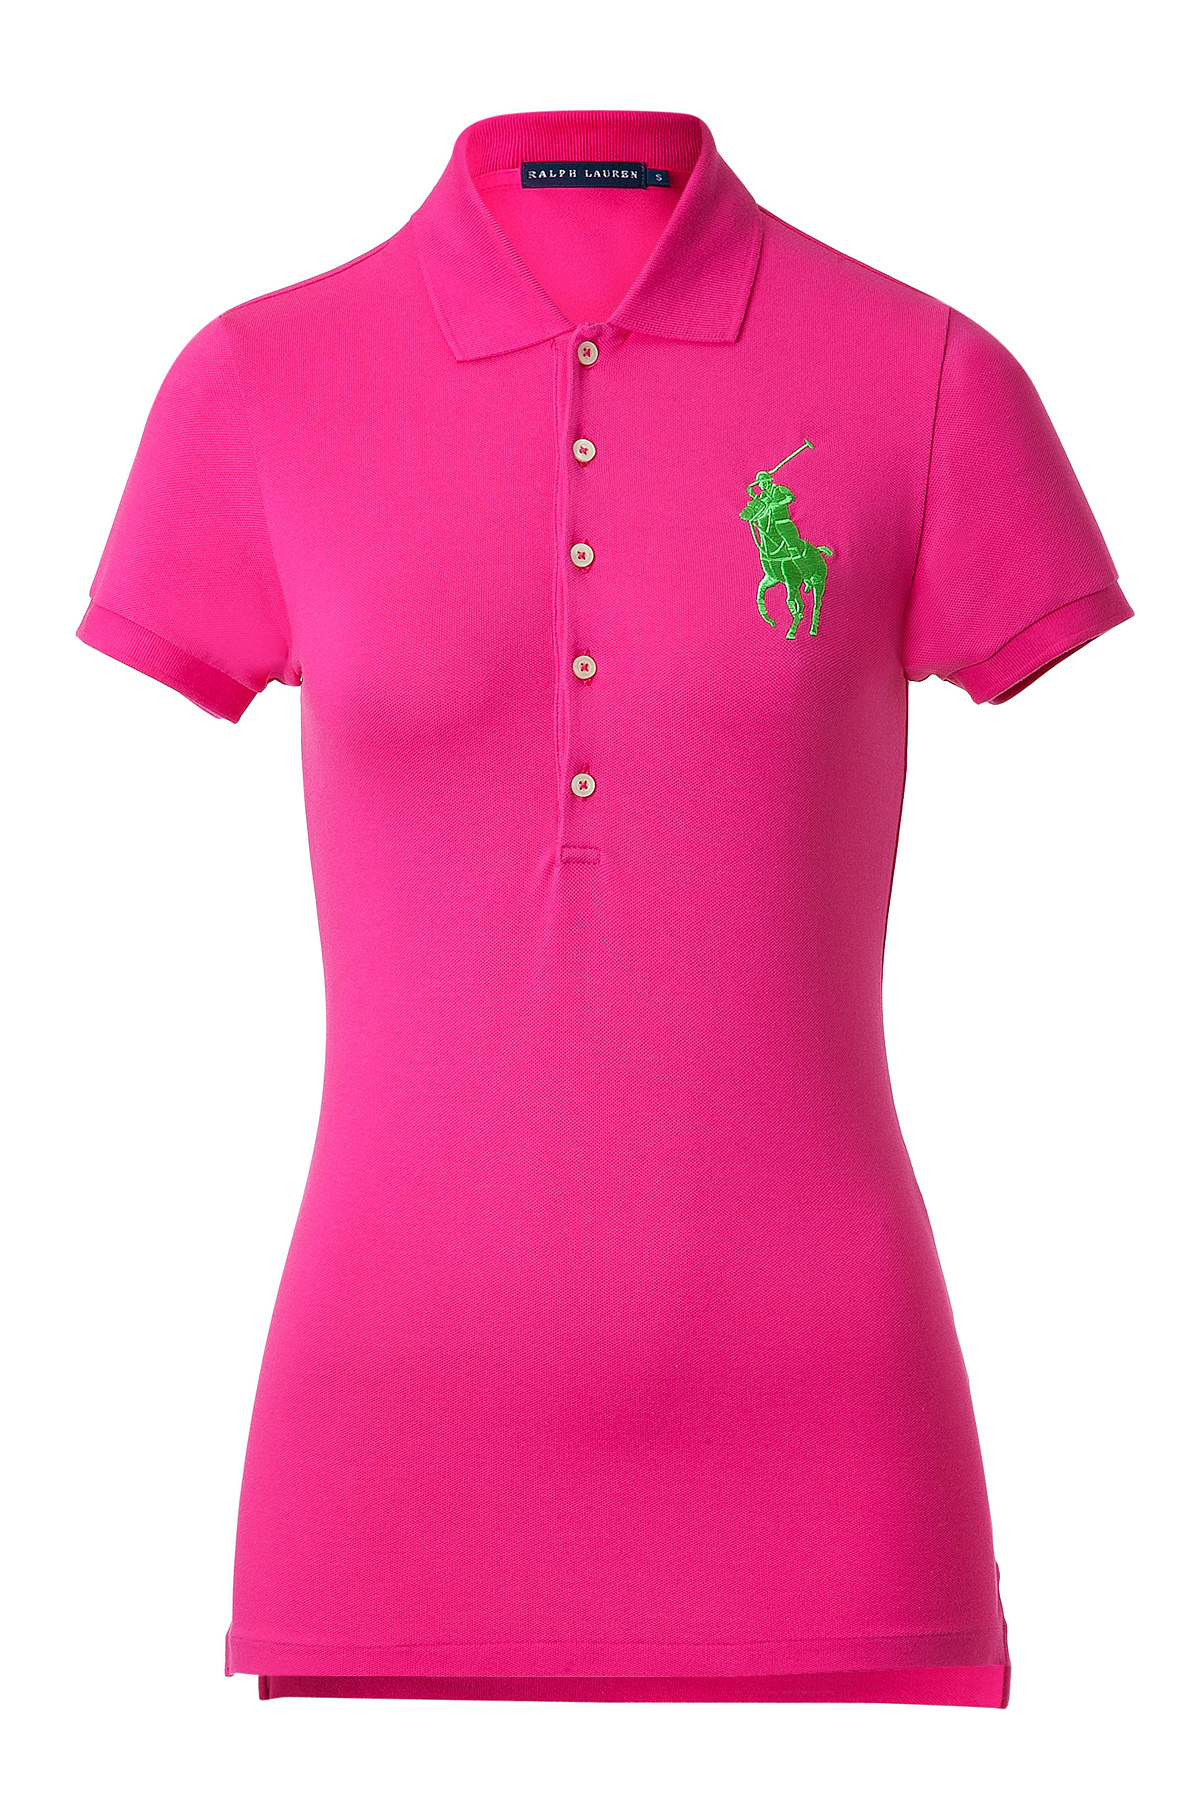 Ralph Lauren Belmont Pink Stretch Cotton Mesh Big Logo Polo Shirt in ...